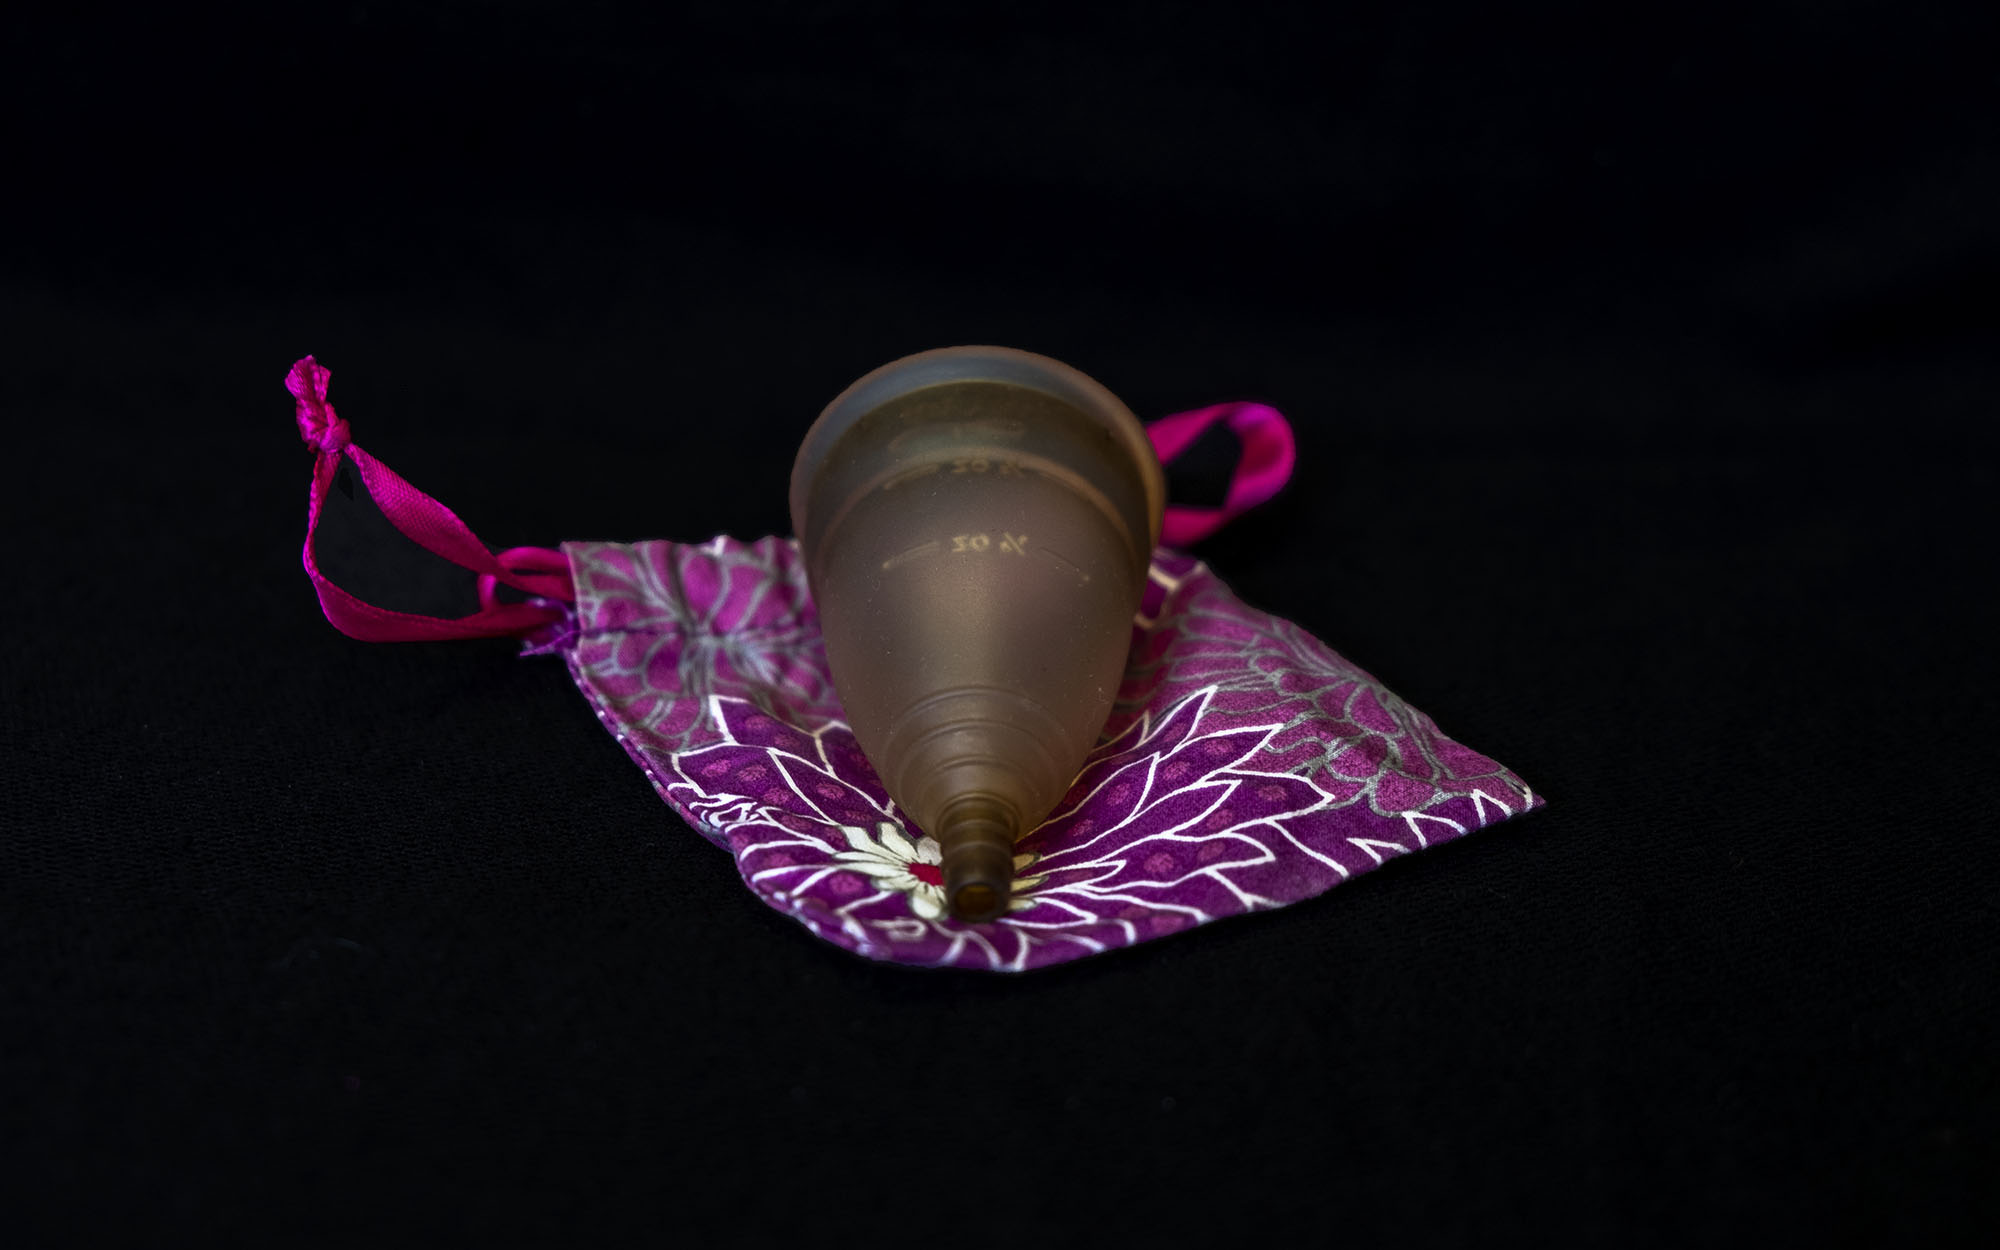 A menstrual cup sits on a purple bag